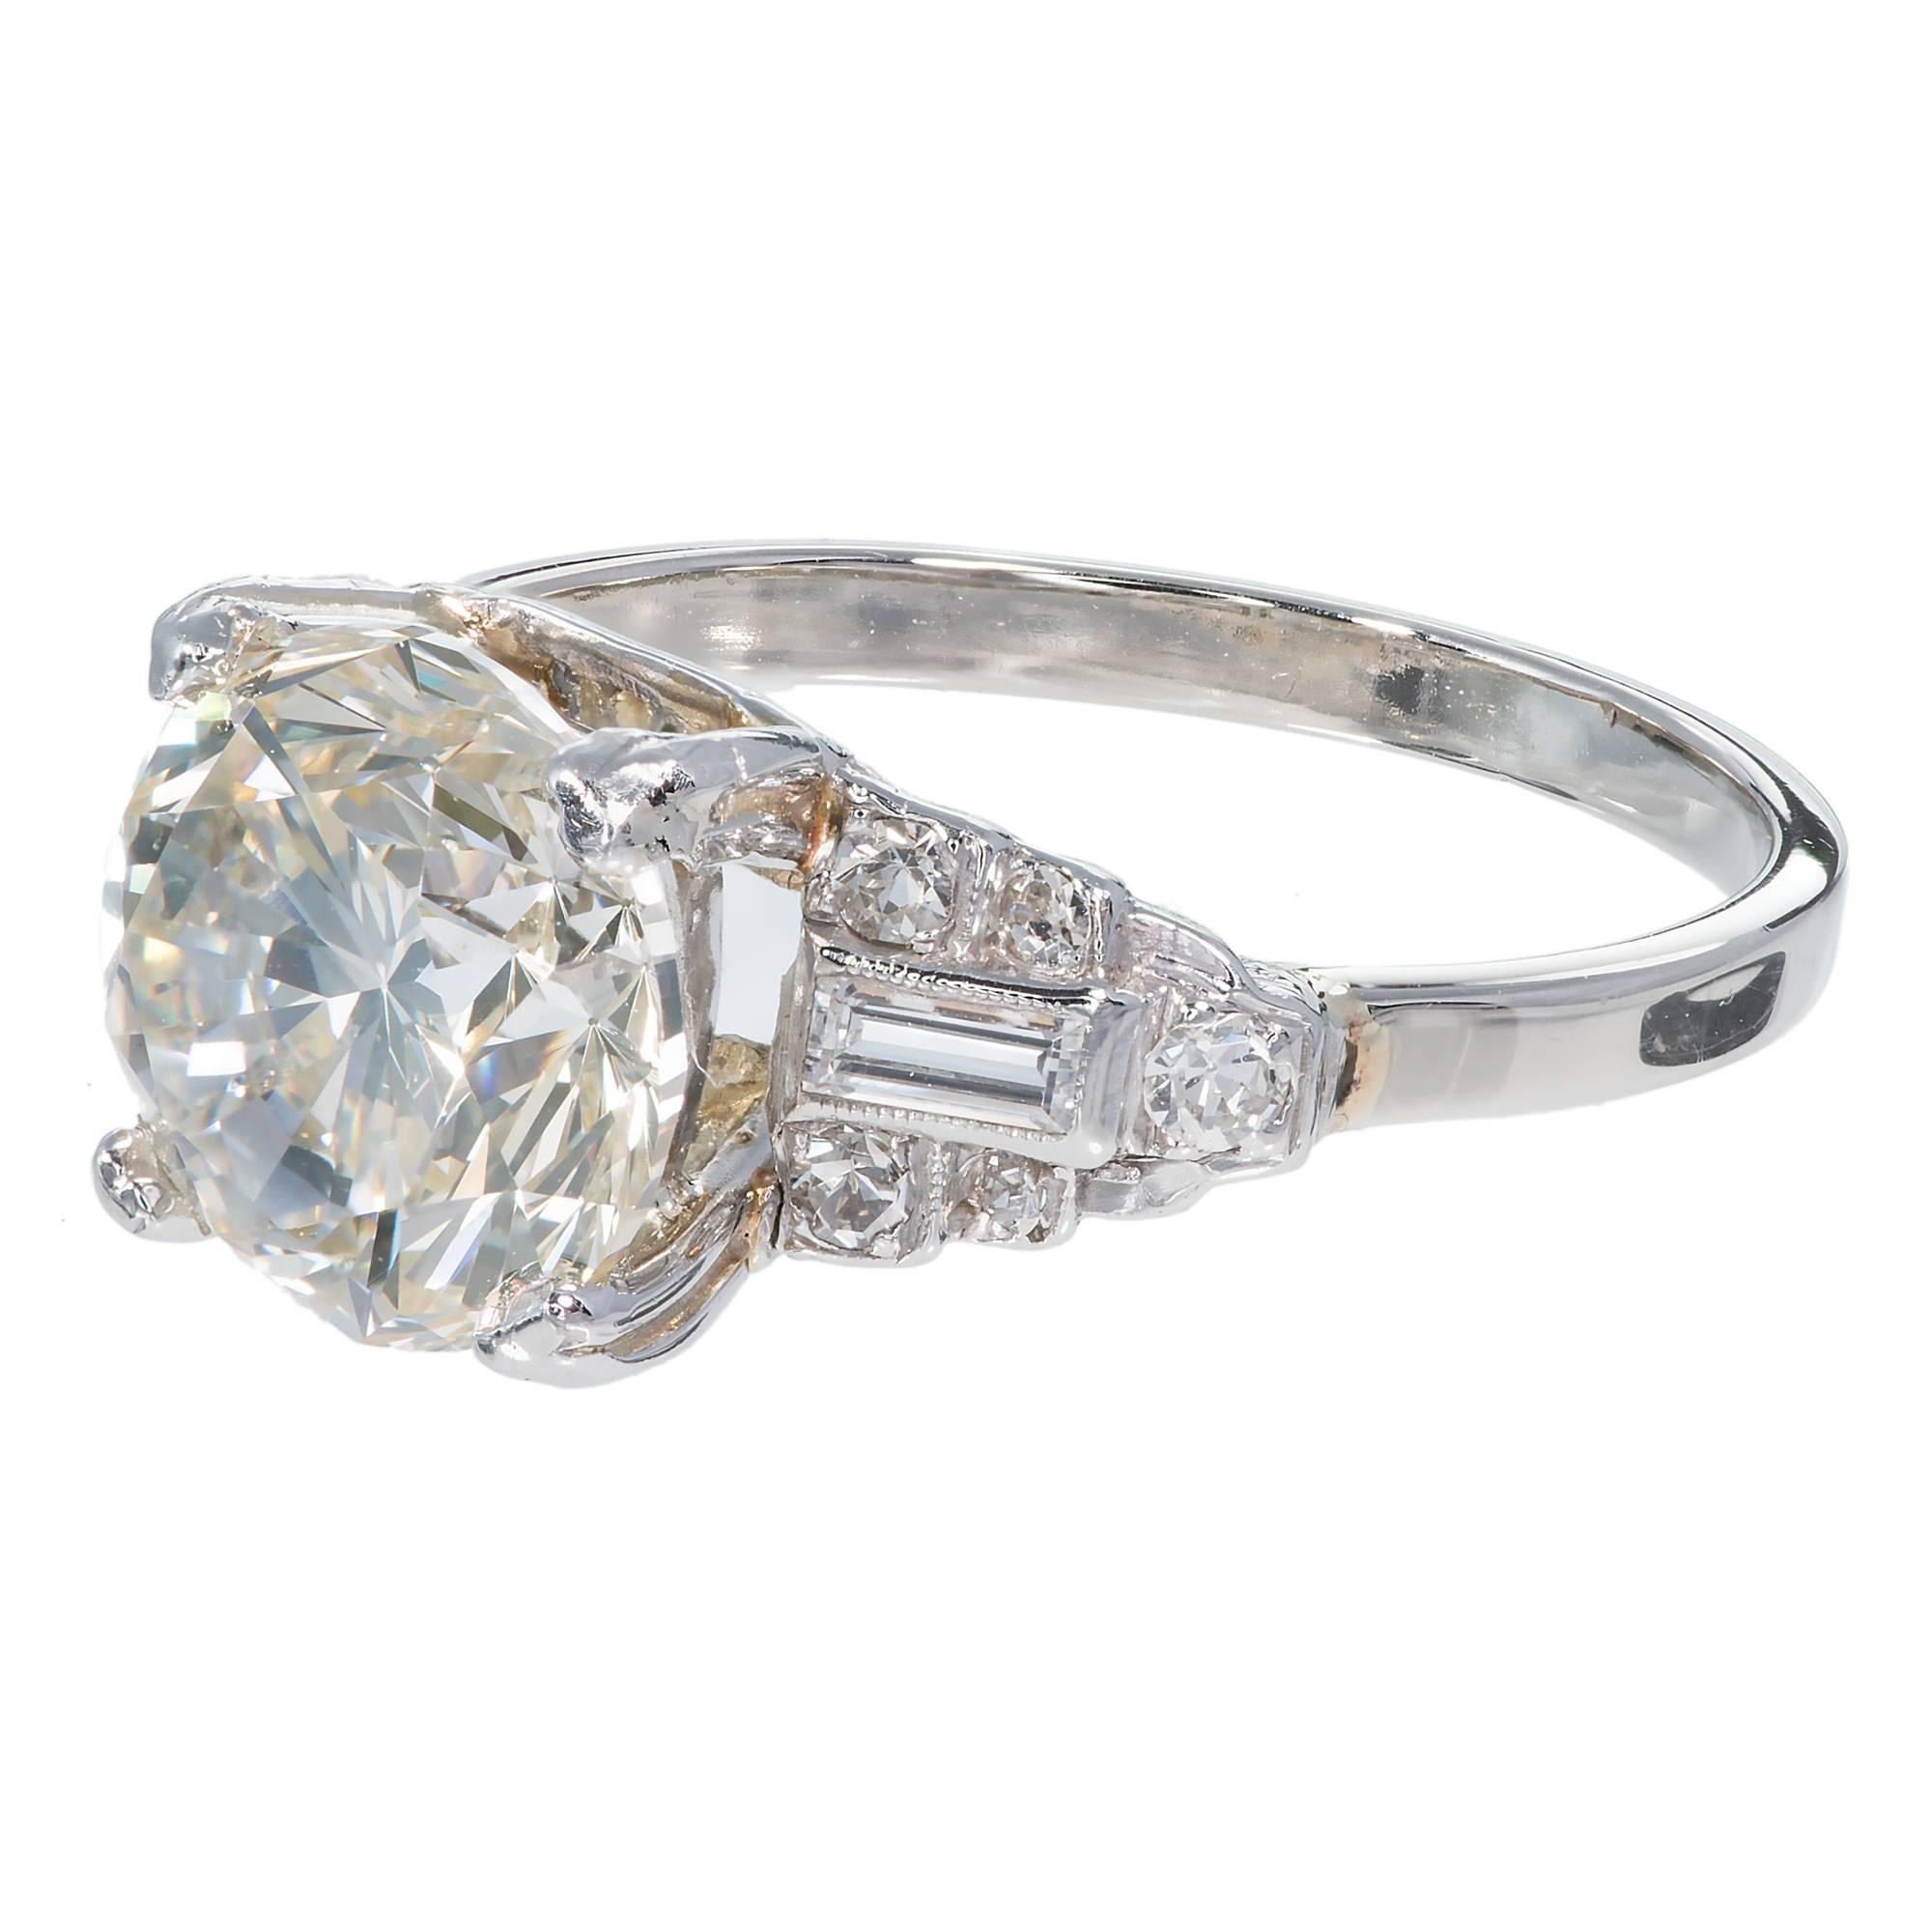 Round Cut GIA Certified 3.33 Carat Transitional Ideal Cut Diamond Platinum Engagement Ring